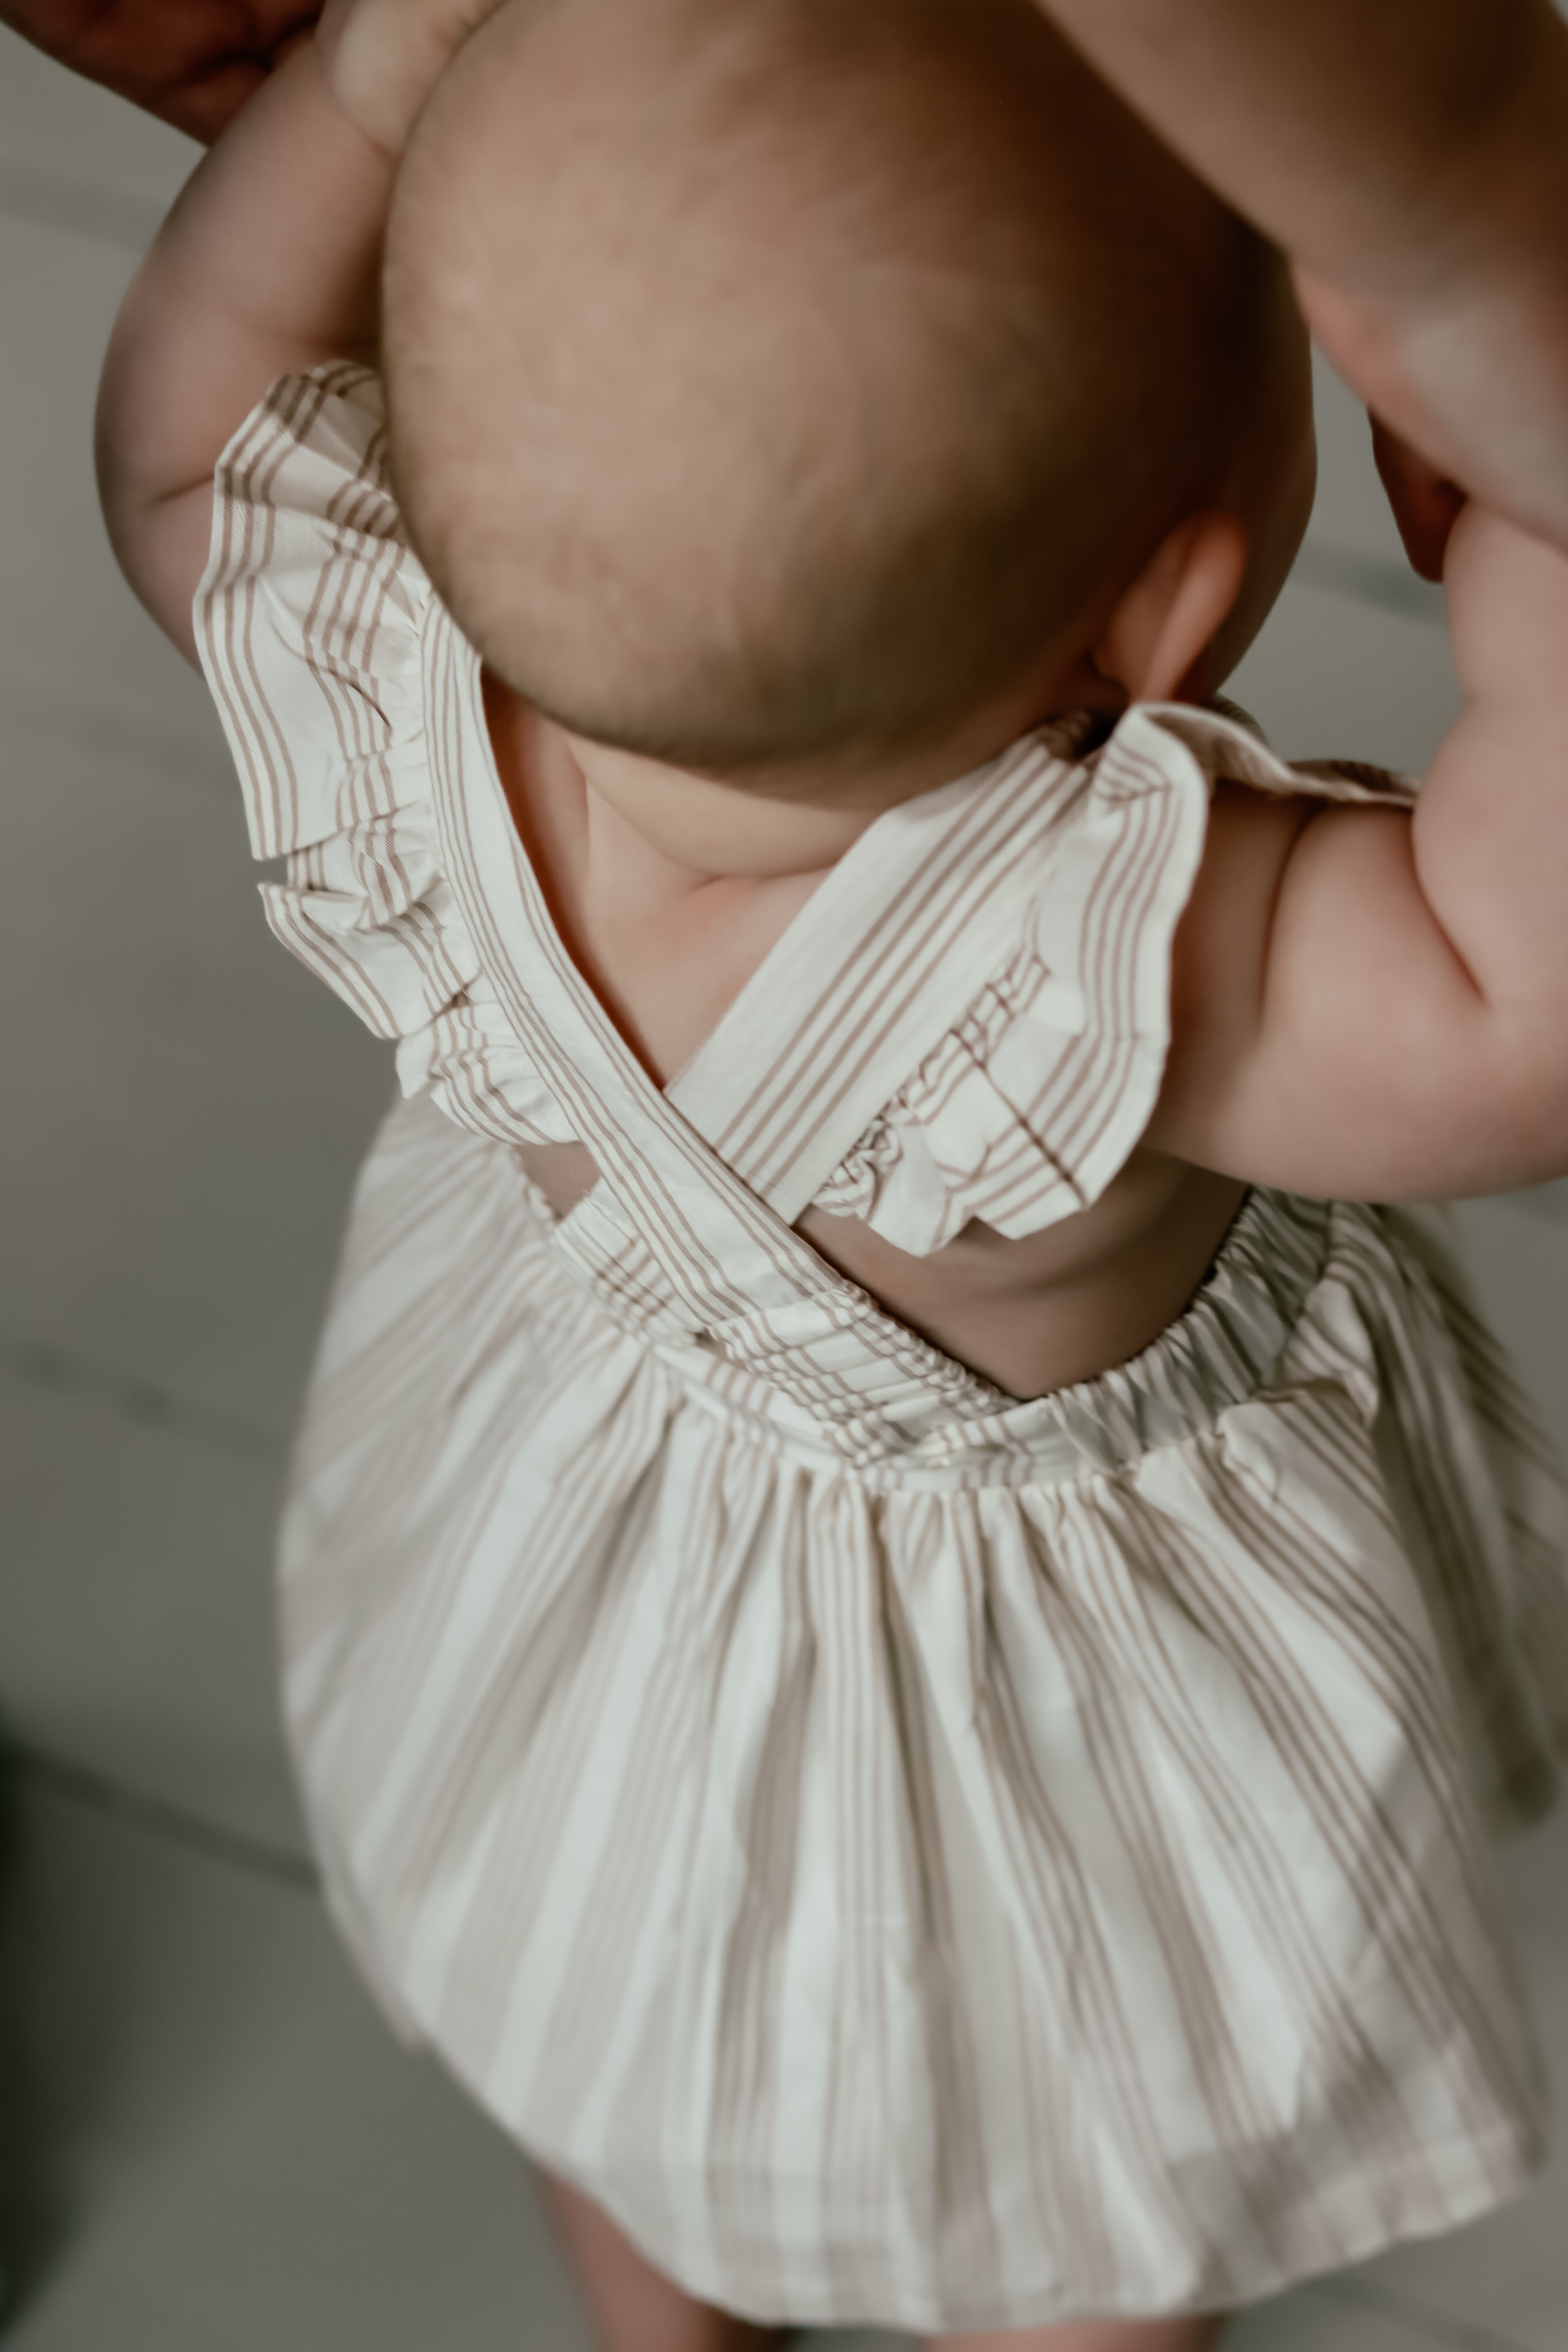 MAMA.LICIOUS Baby-dress -Light Taupe - 88888759